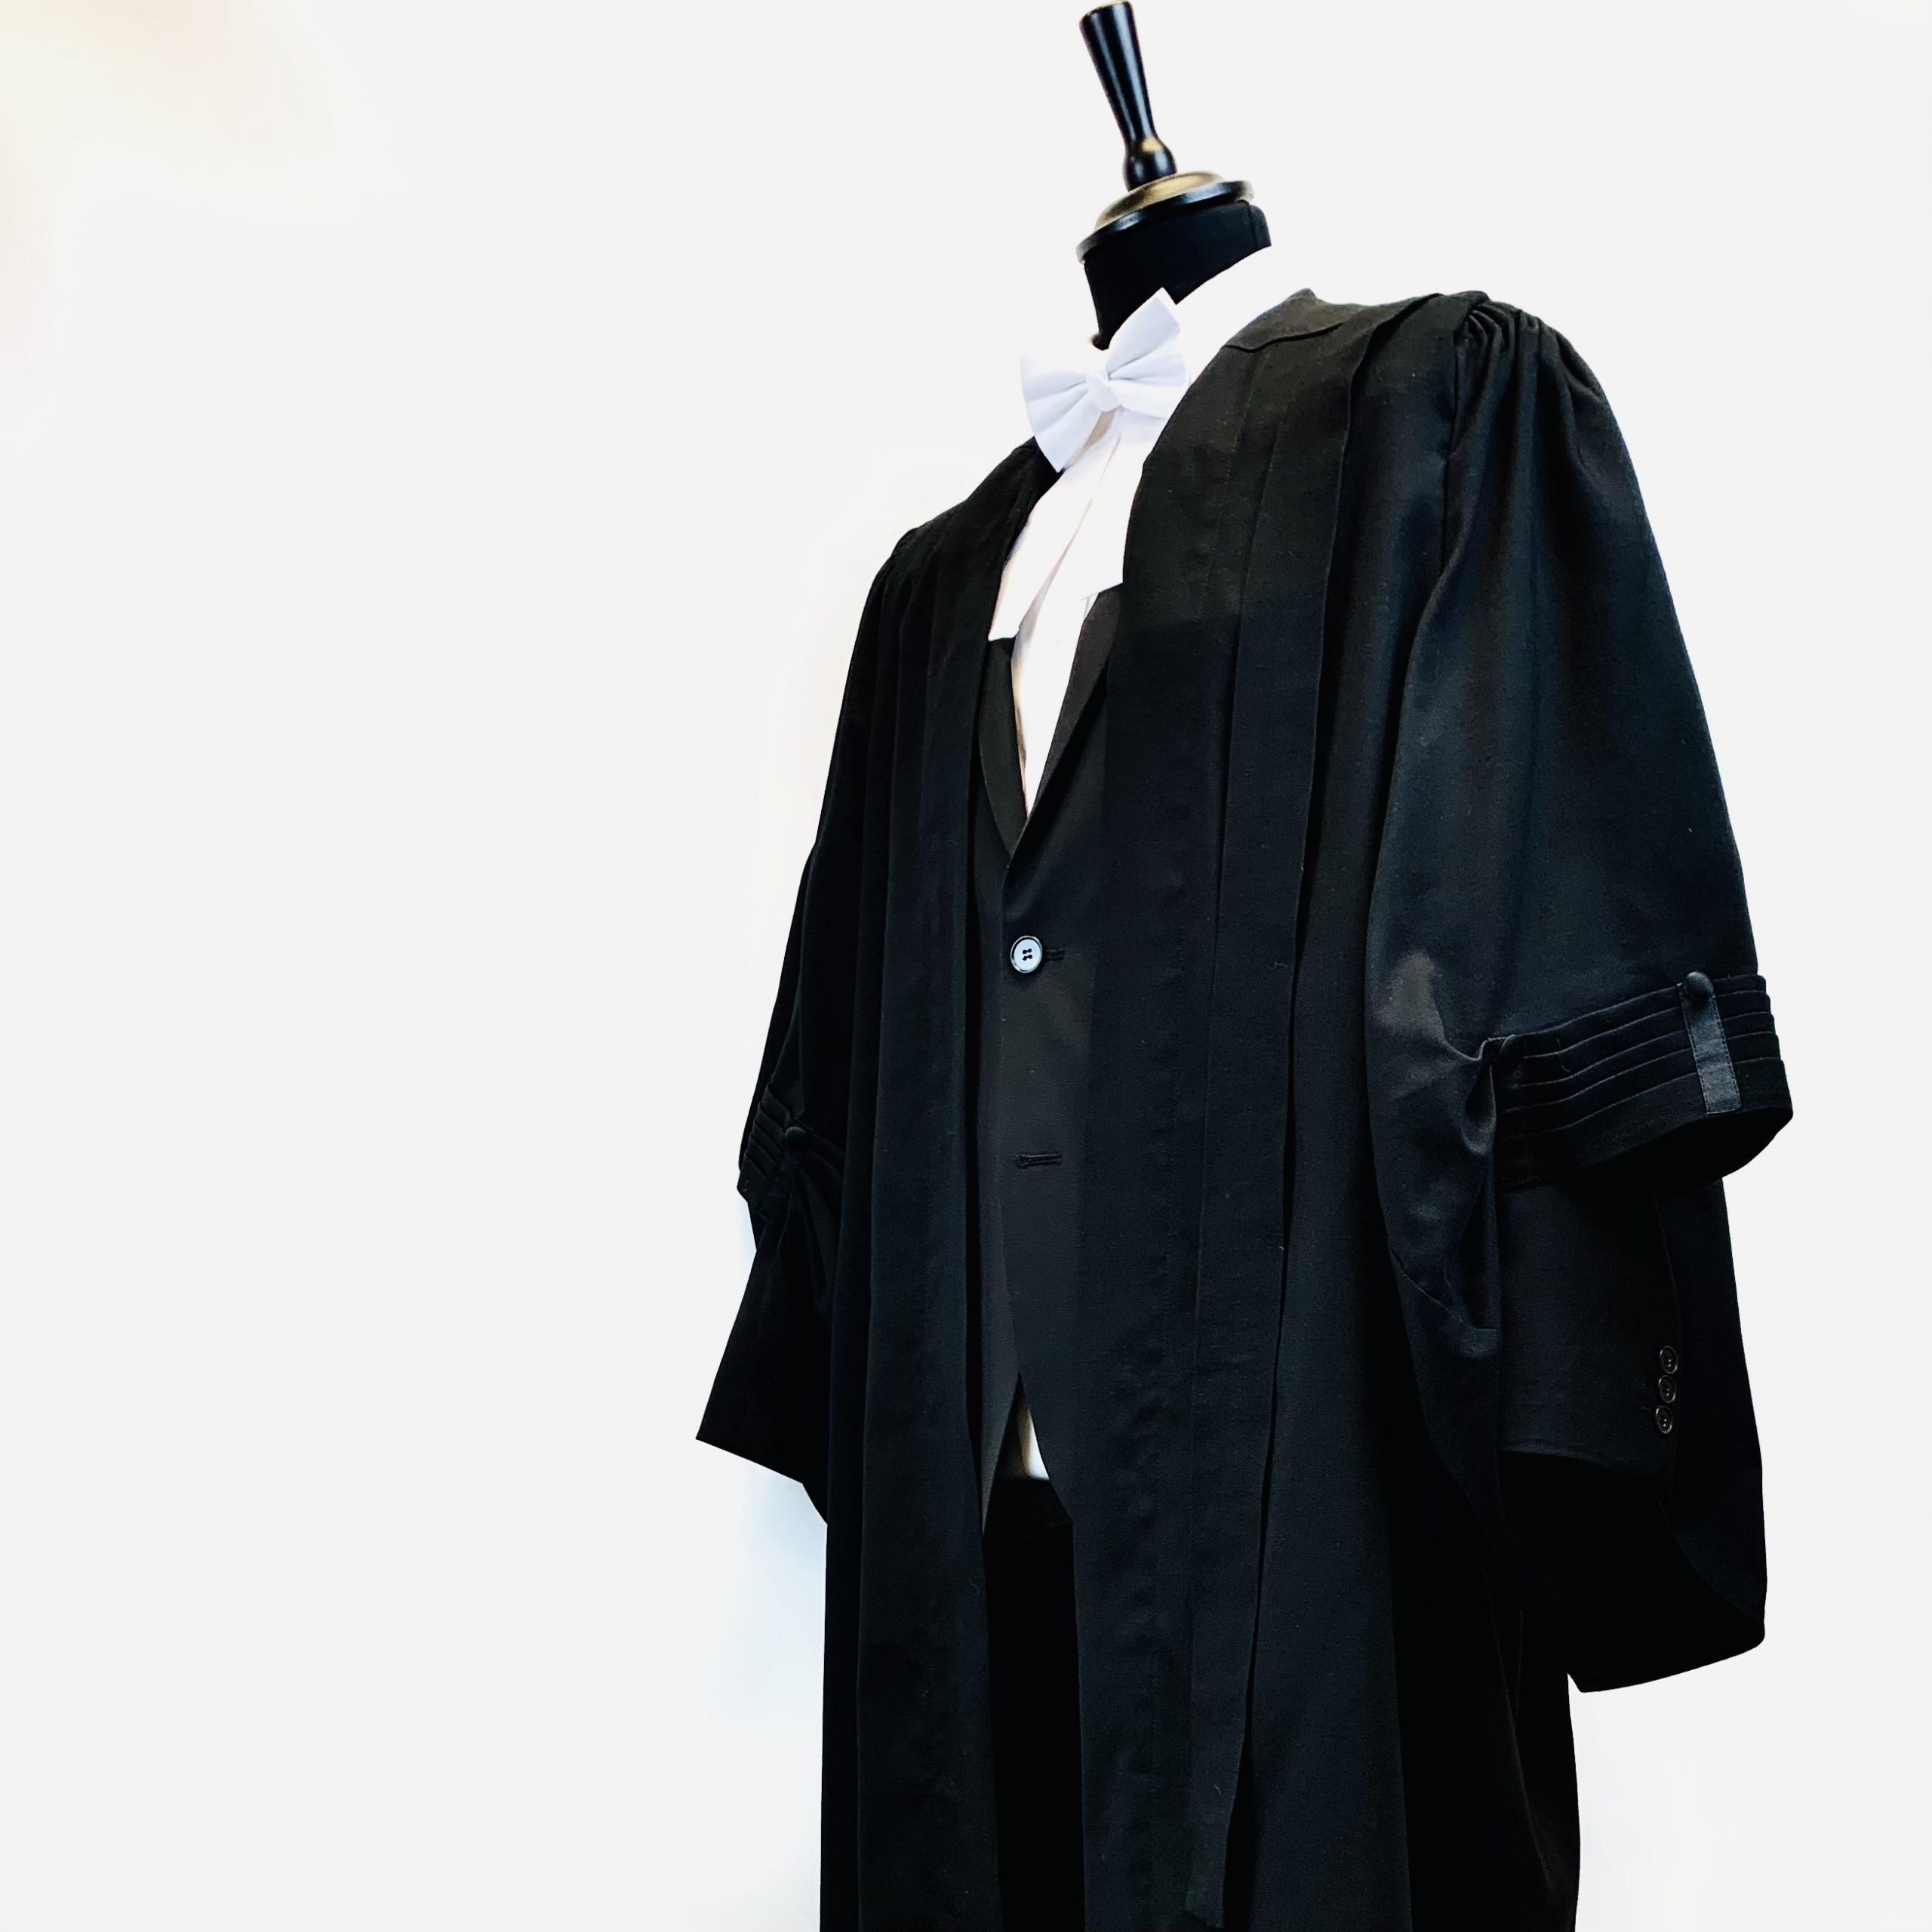 Judicial Gowns